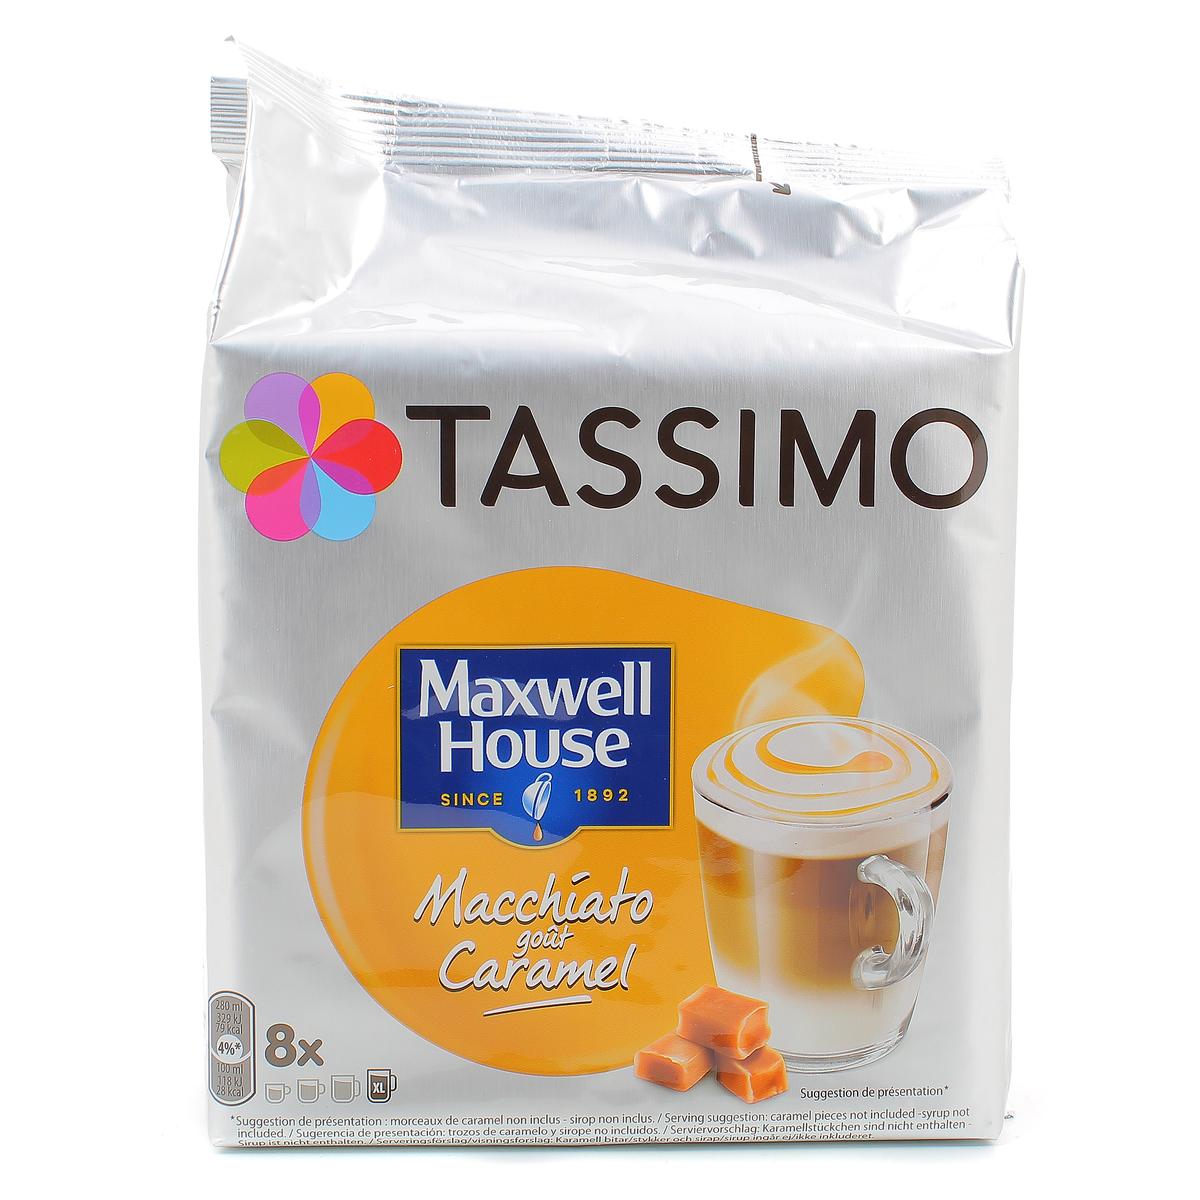 Tassimo Café dosettes Maxwell house latte macchiato caramel, 8